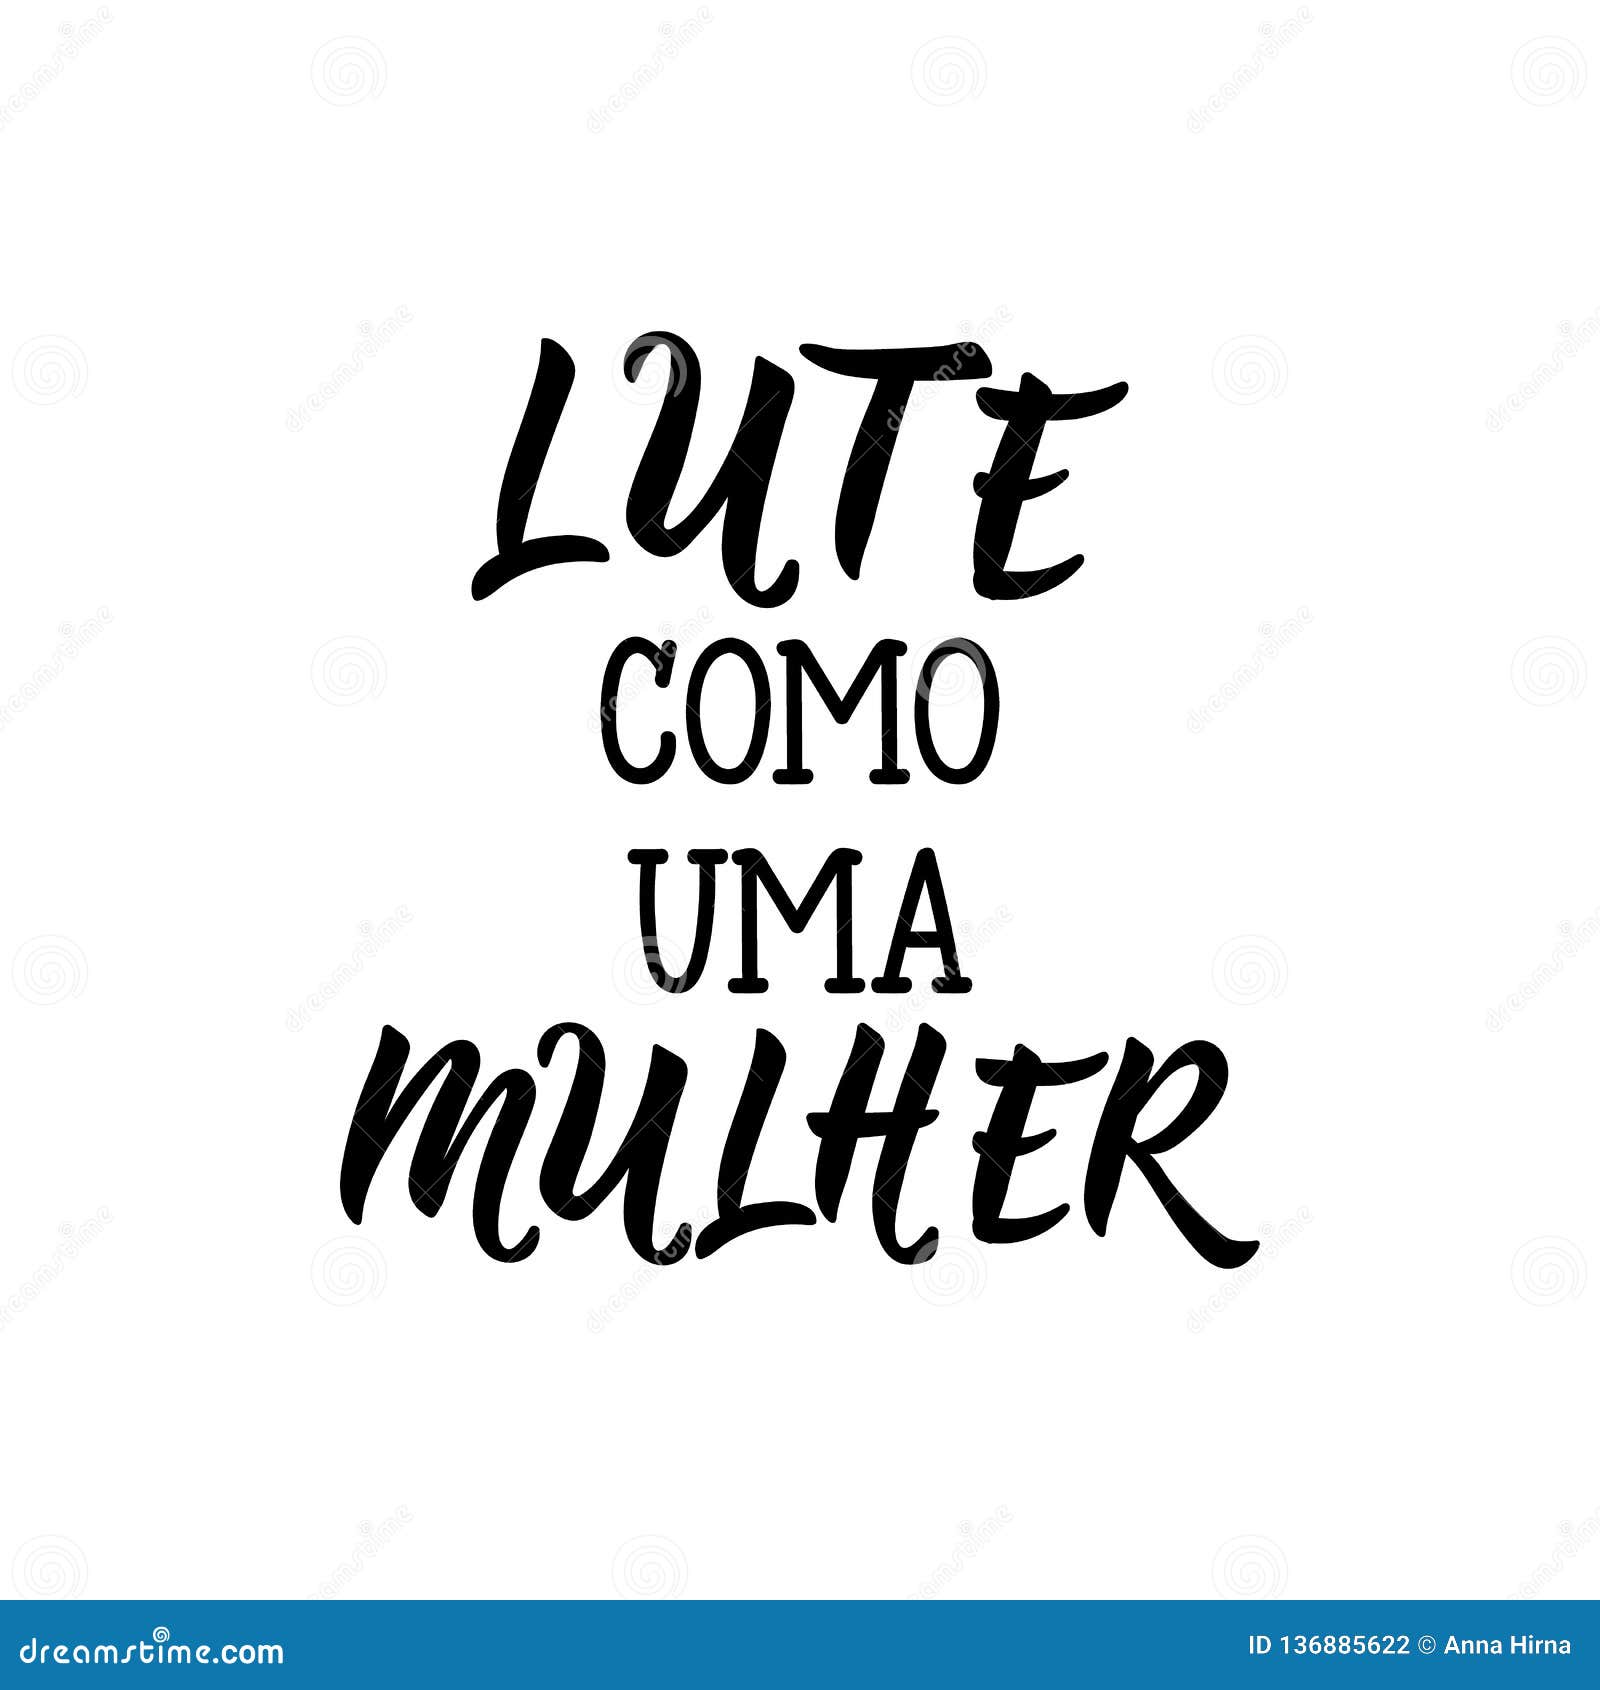 fight like a woman lettering card. translation from portuguese - fight like a woman. lute como uma mulher